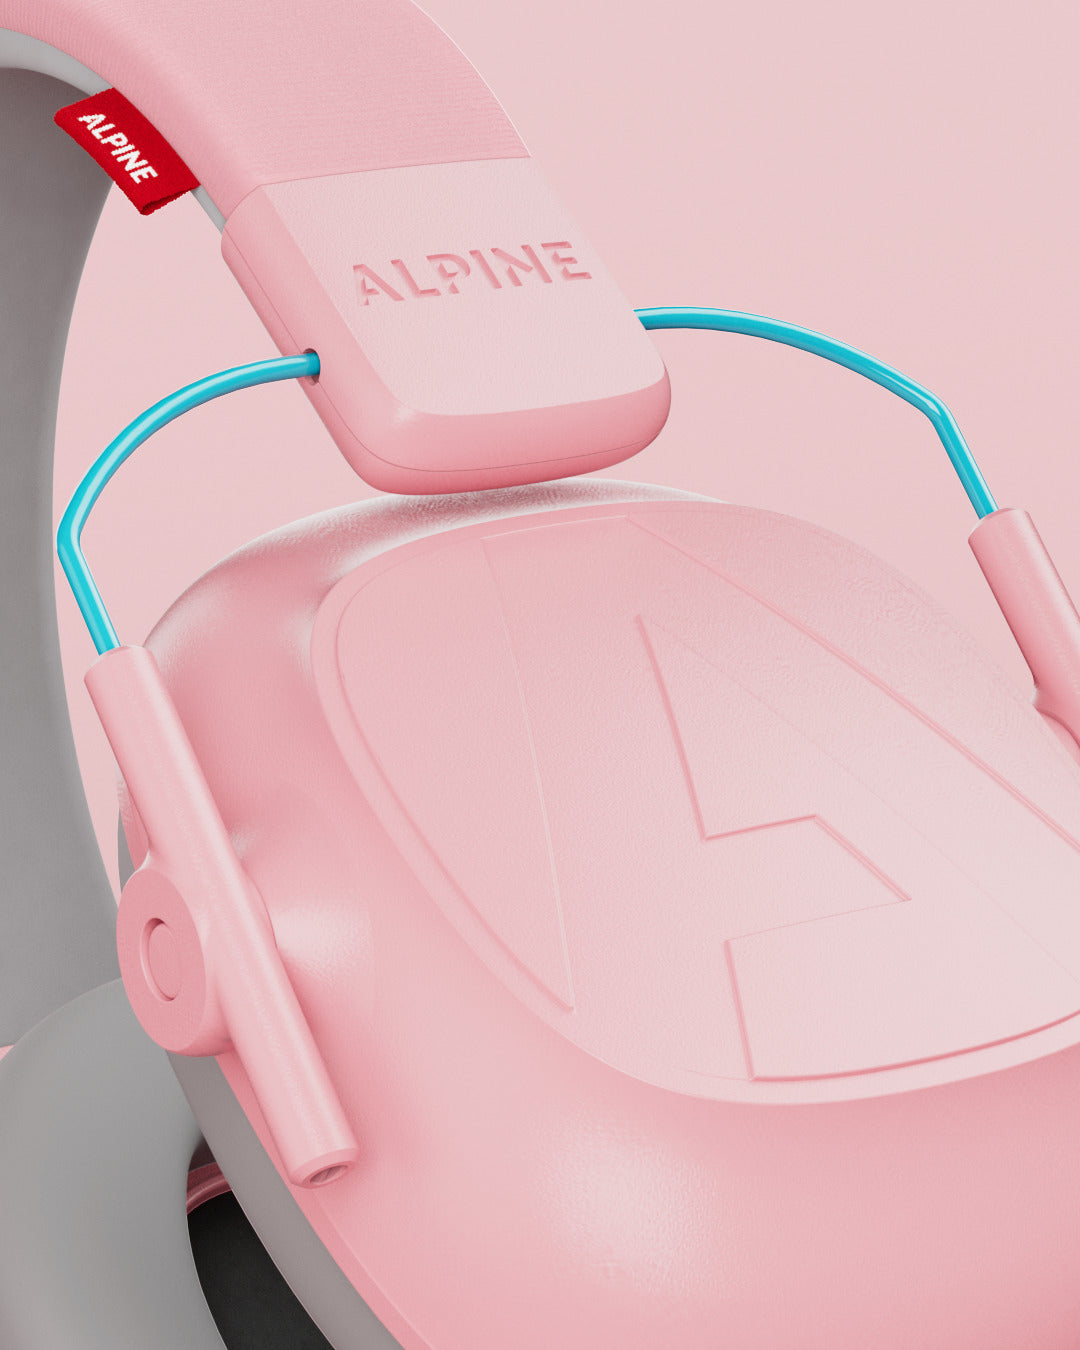 alpine muffy kids earmuffs for kids productdetail pink